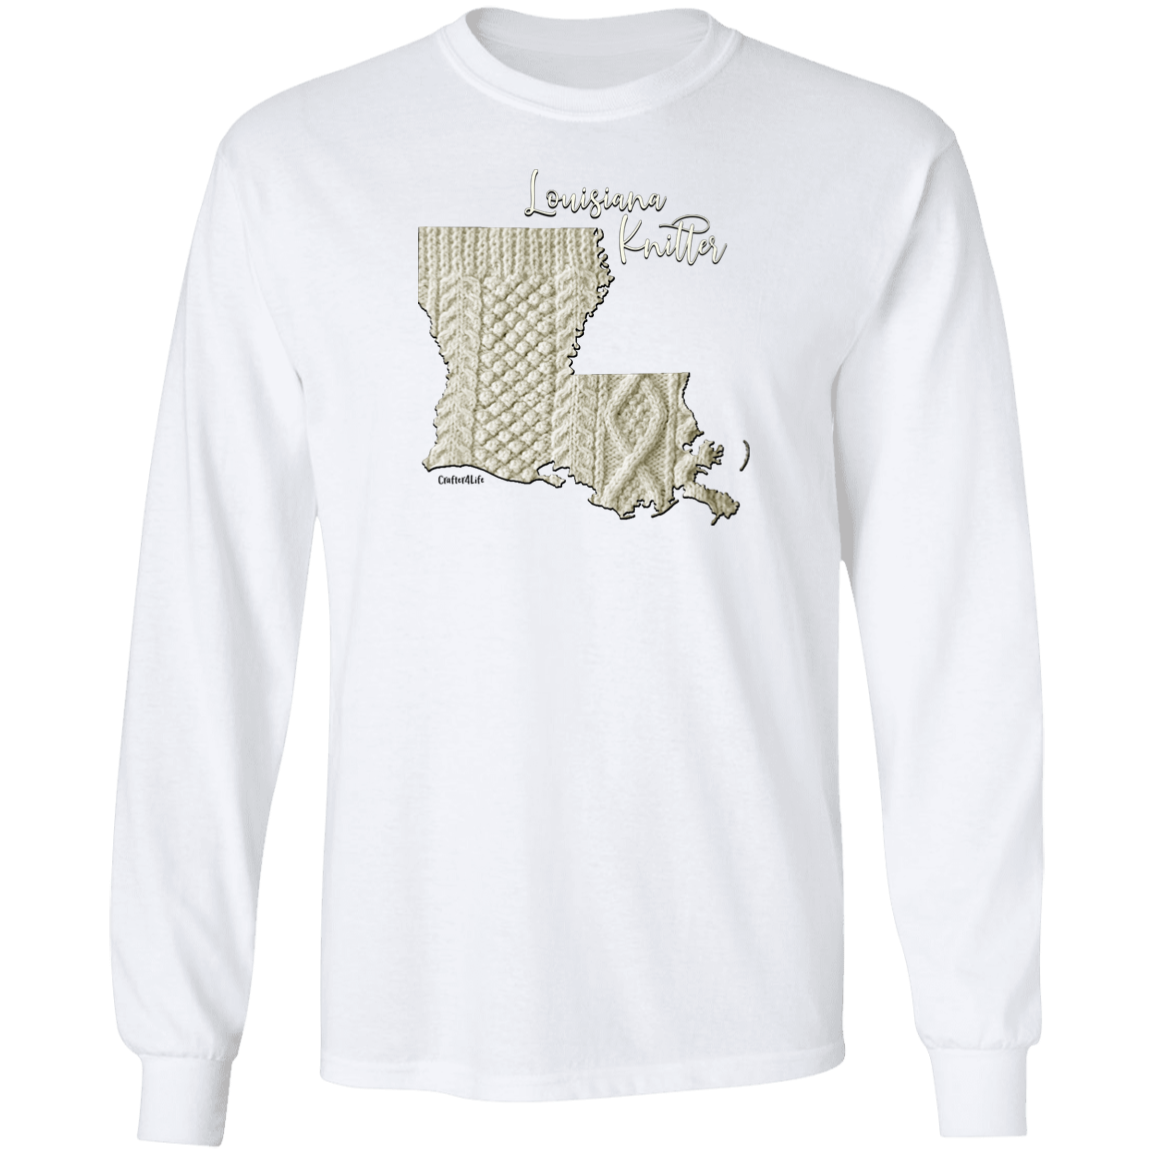 Louisiana Knitter LS Ultra Cotton T-Shirt